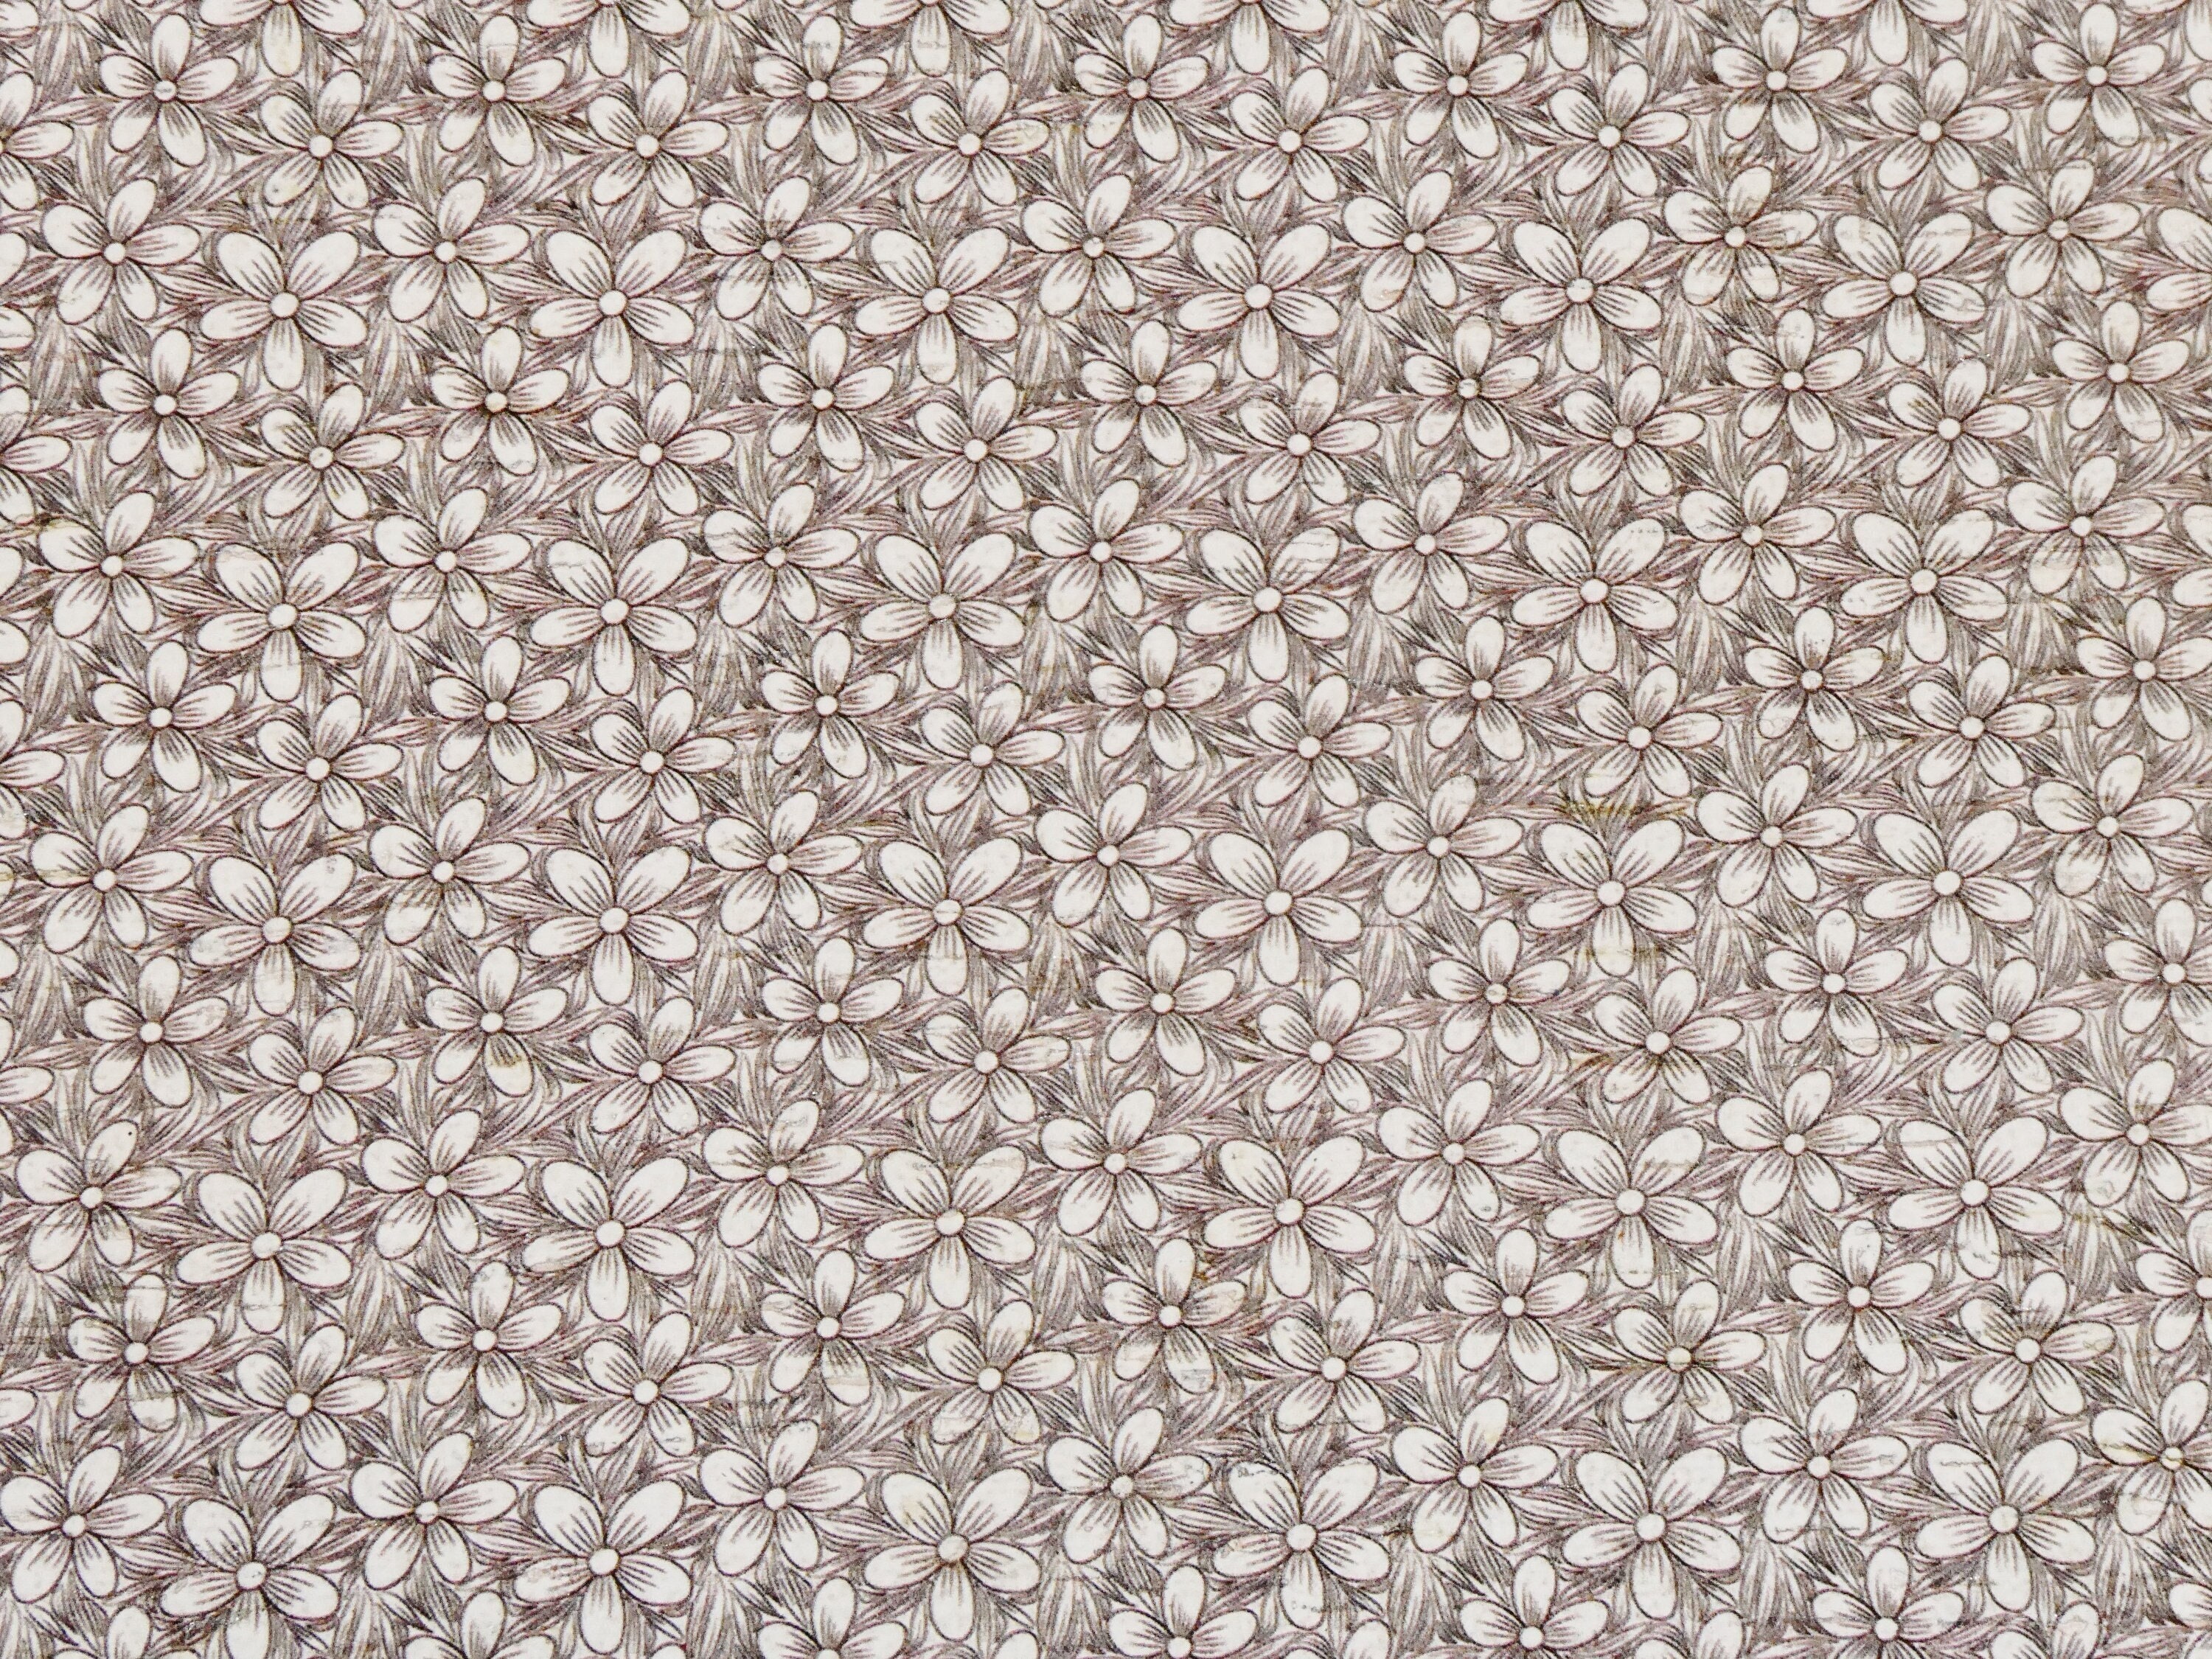 Fine GLITTER 12x12 SILVER Glitter applied to Pearl Gray Leather THiCK  5.5oz/2.2 mm PeggySueAlso E4355-42 E4356-01